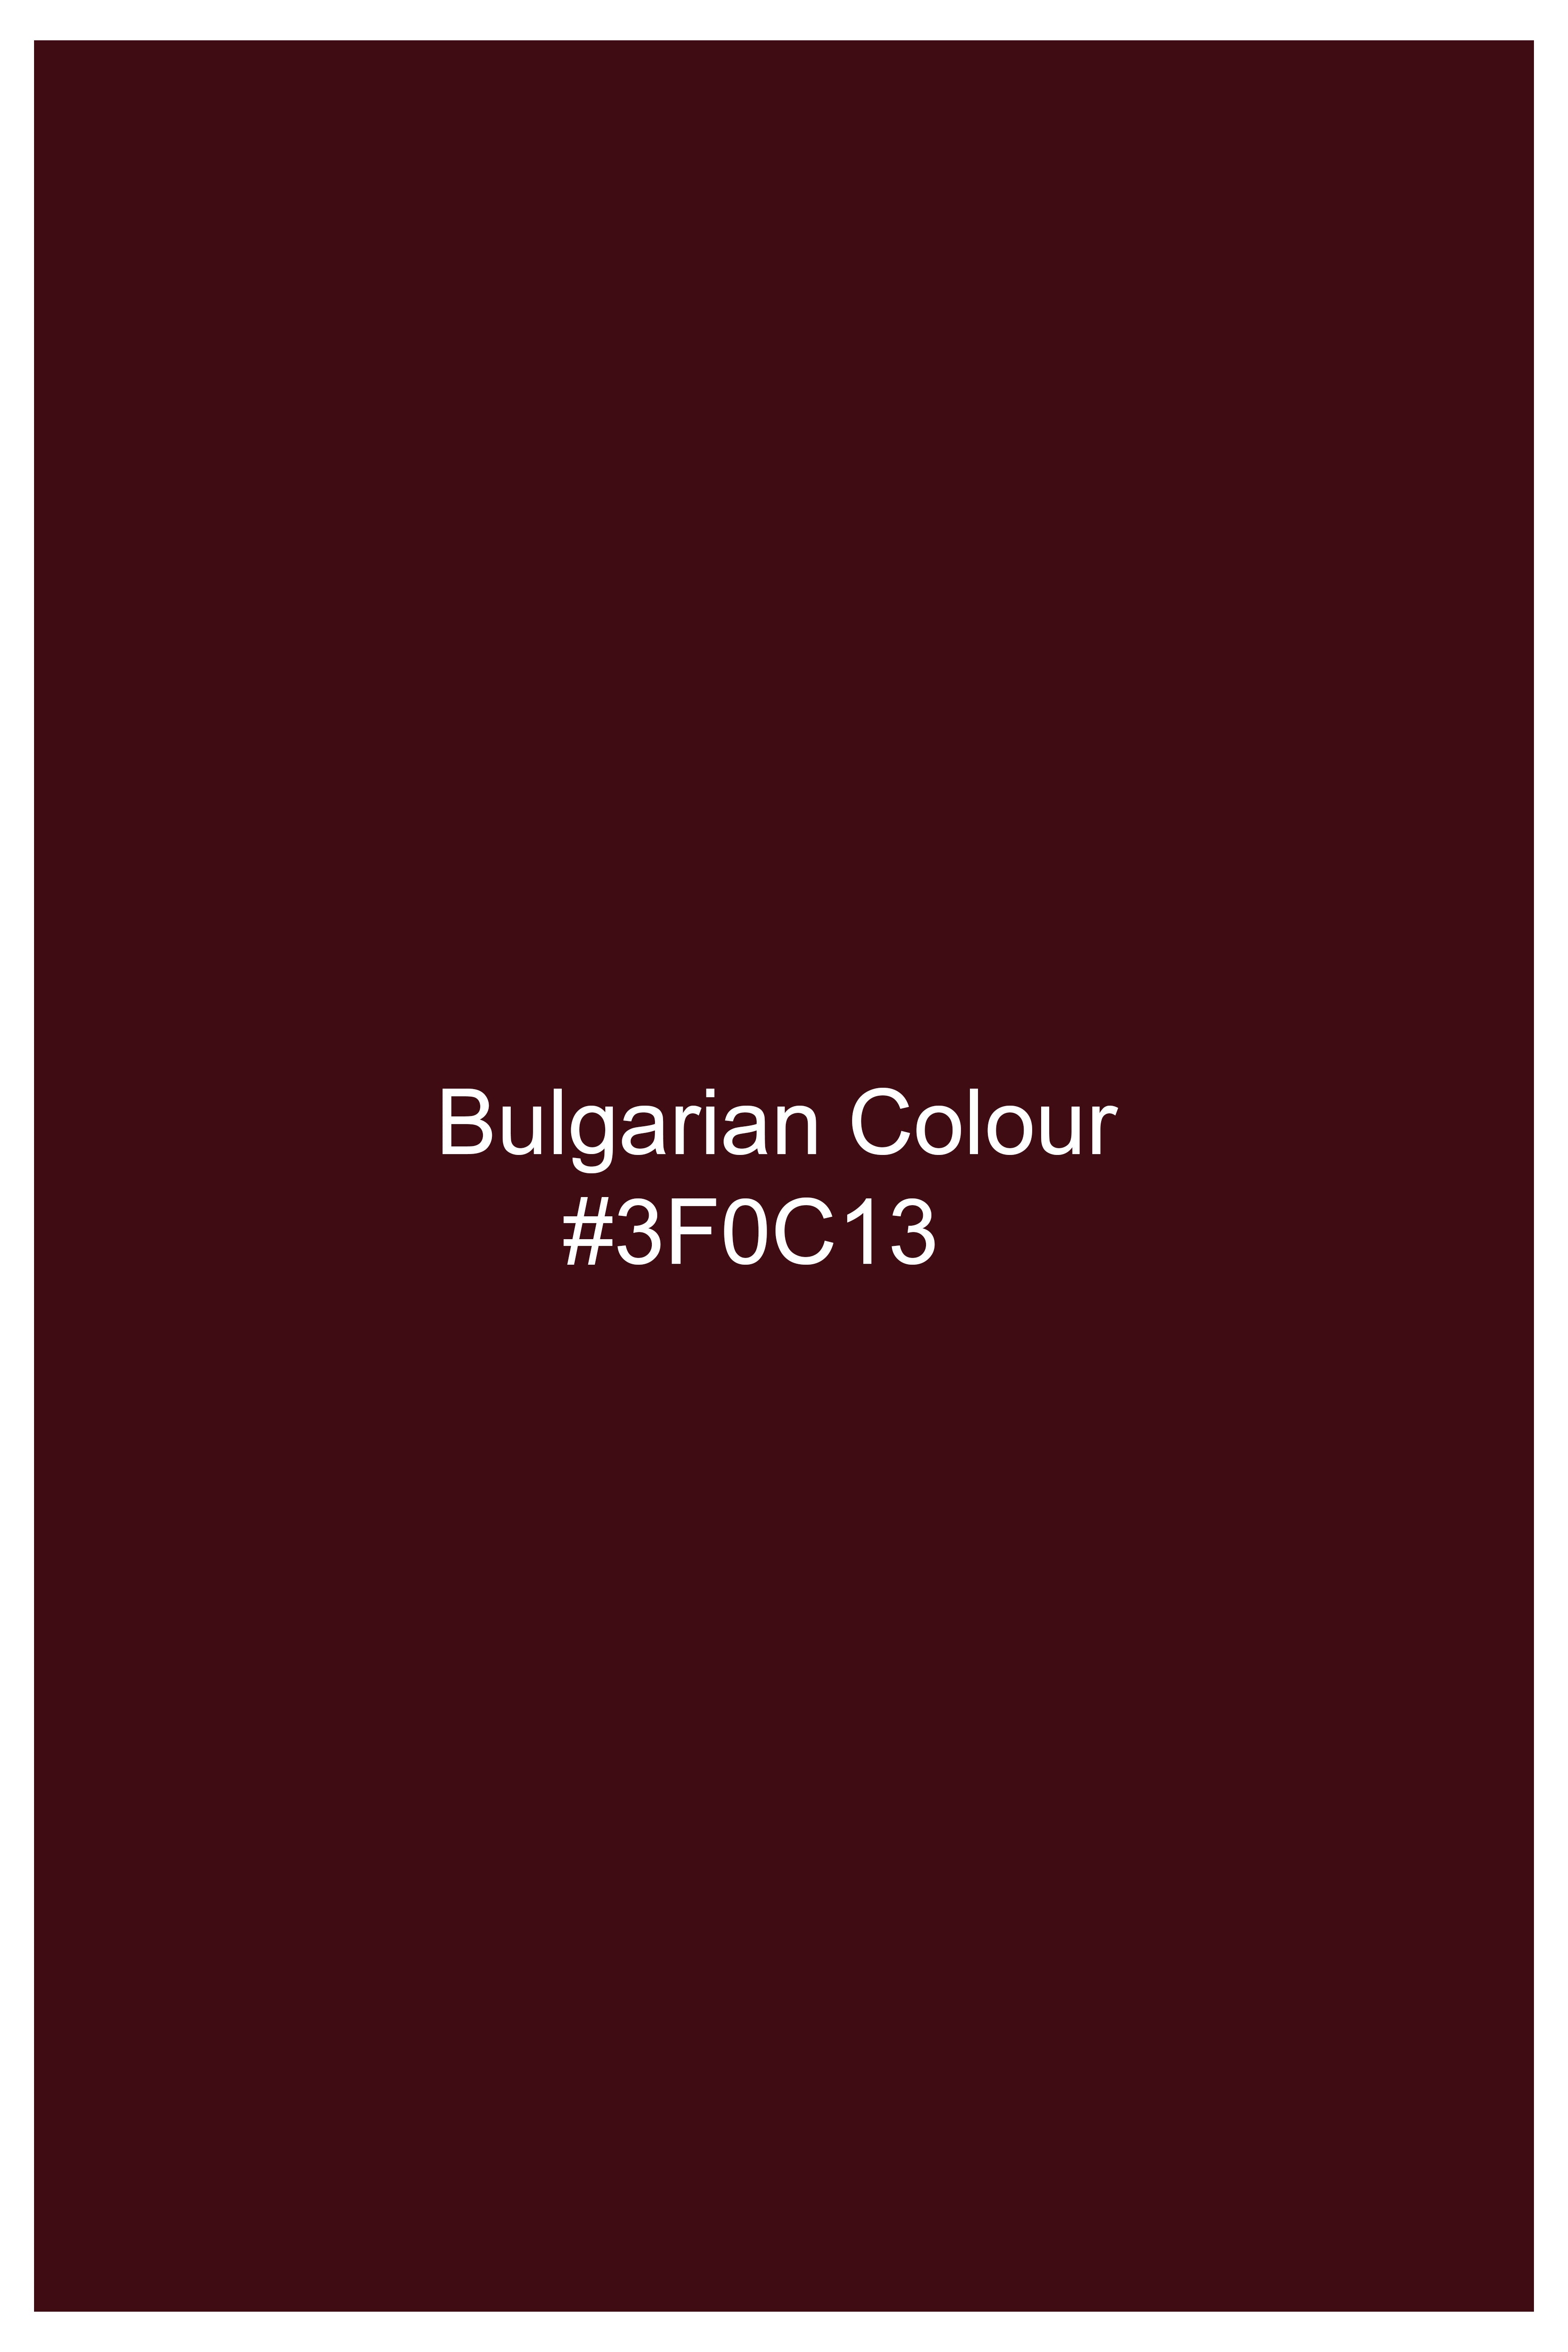 Bulgarian Maroon Crushed Velvet Cross Placket Bandhgala Blazer